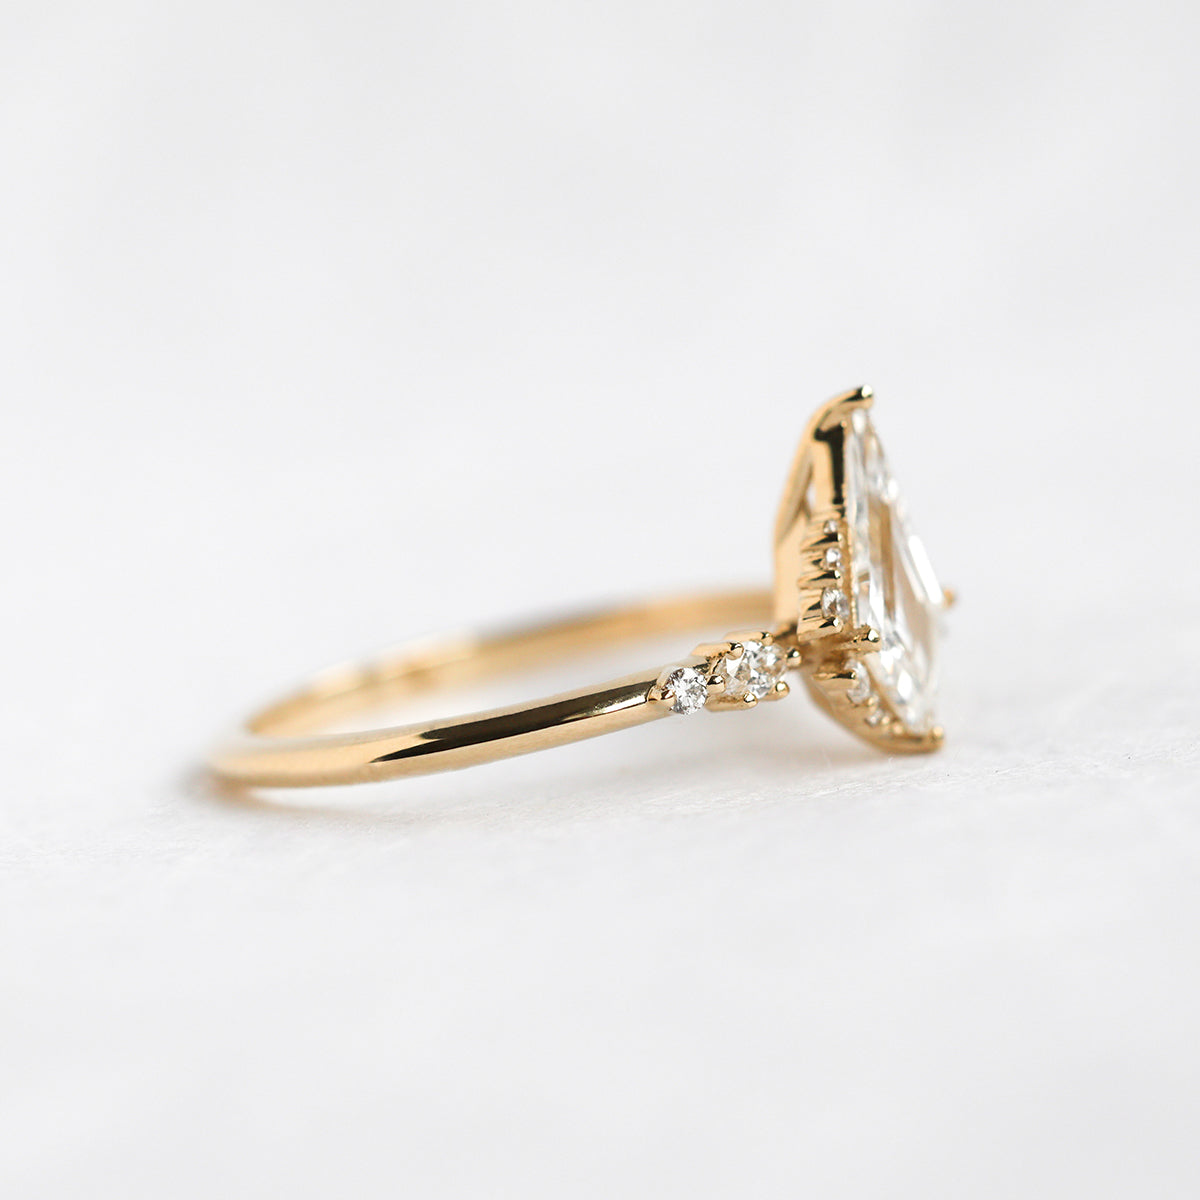 Kite-shaped white diamond engagement ring set